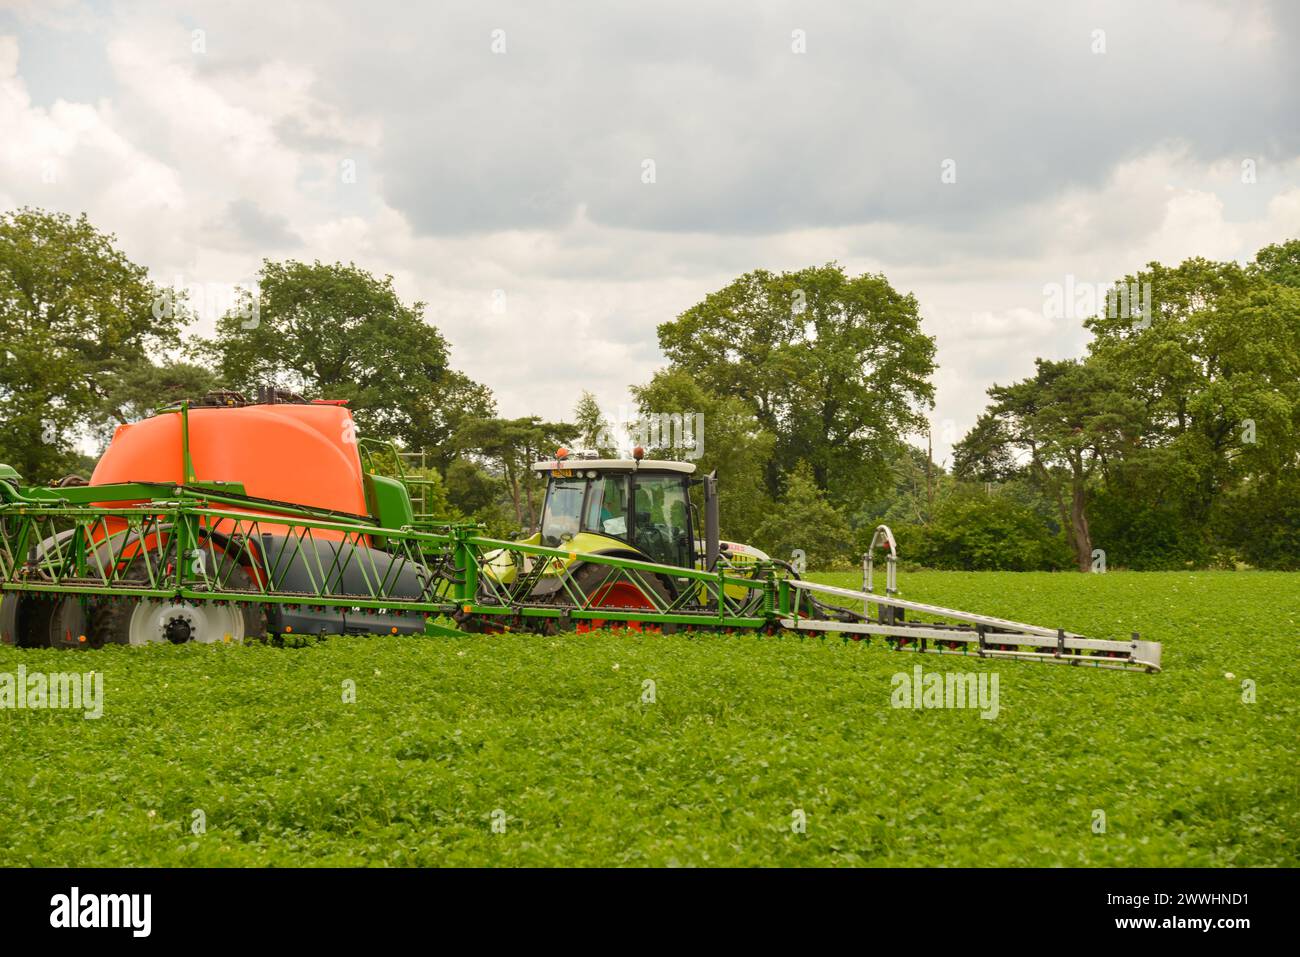 tractor spraying herbicide at farmland Stock Photo